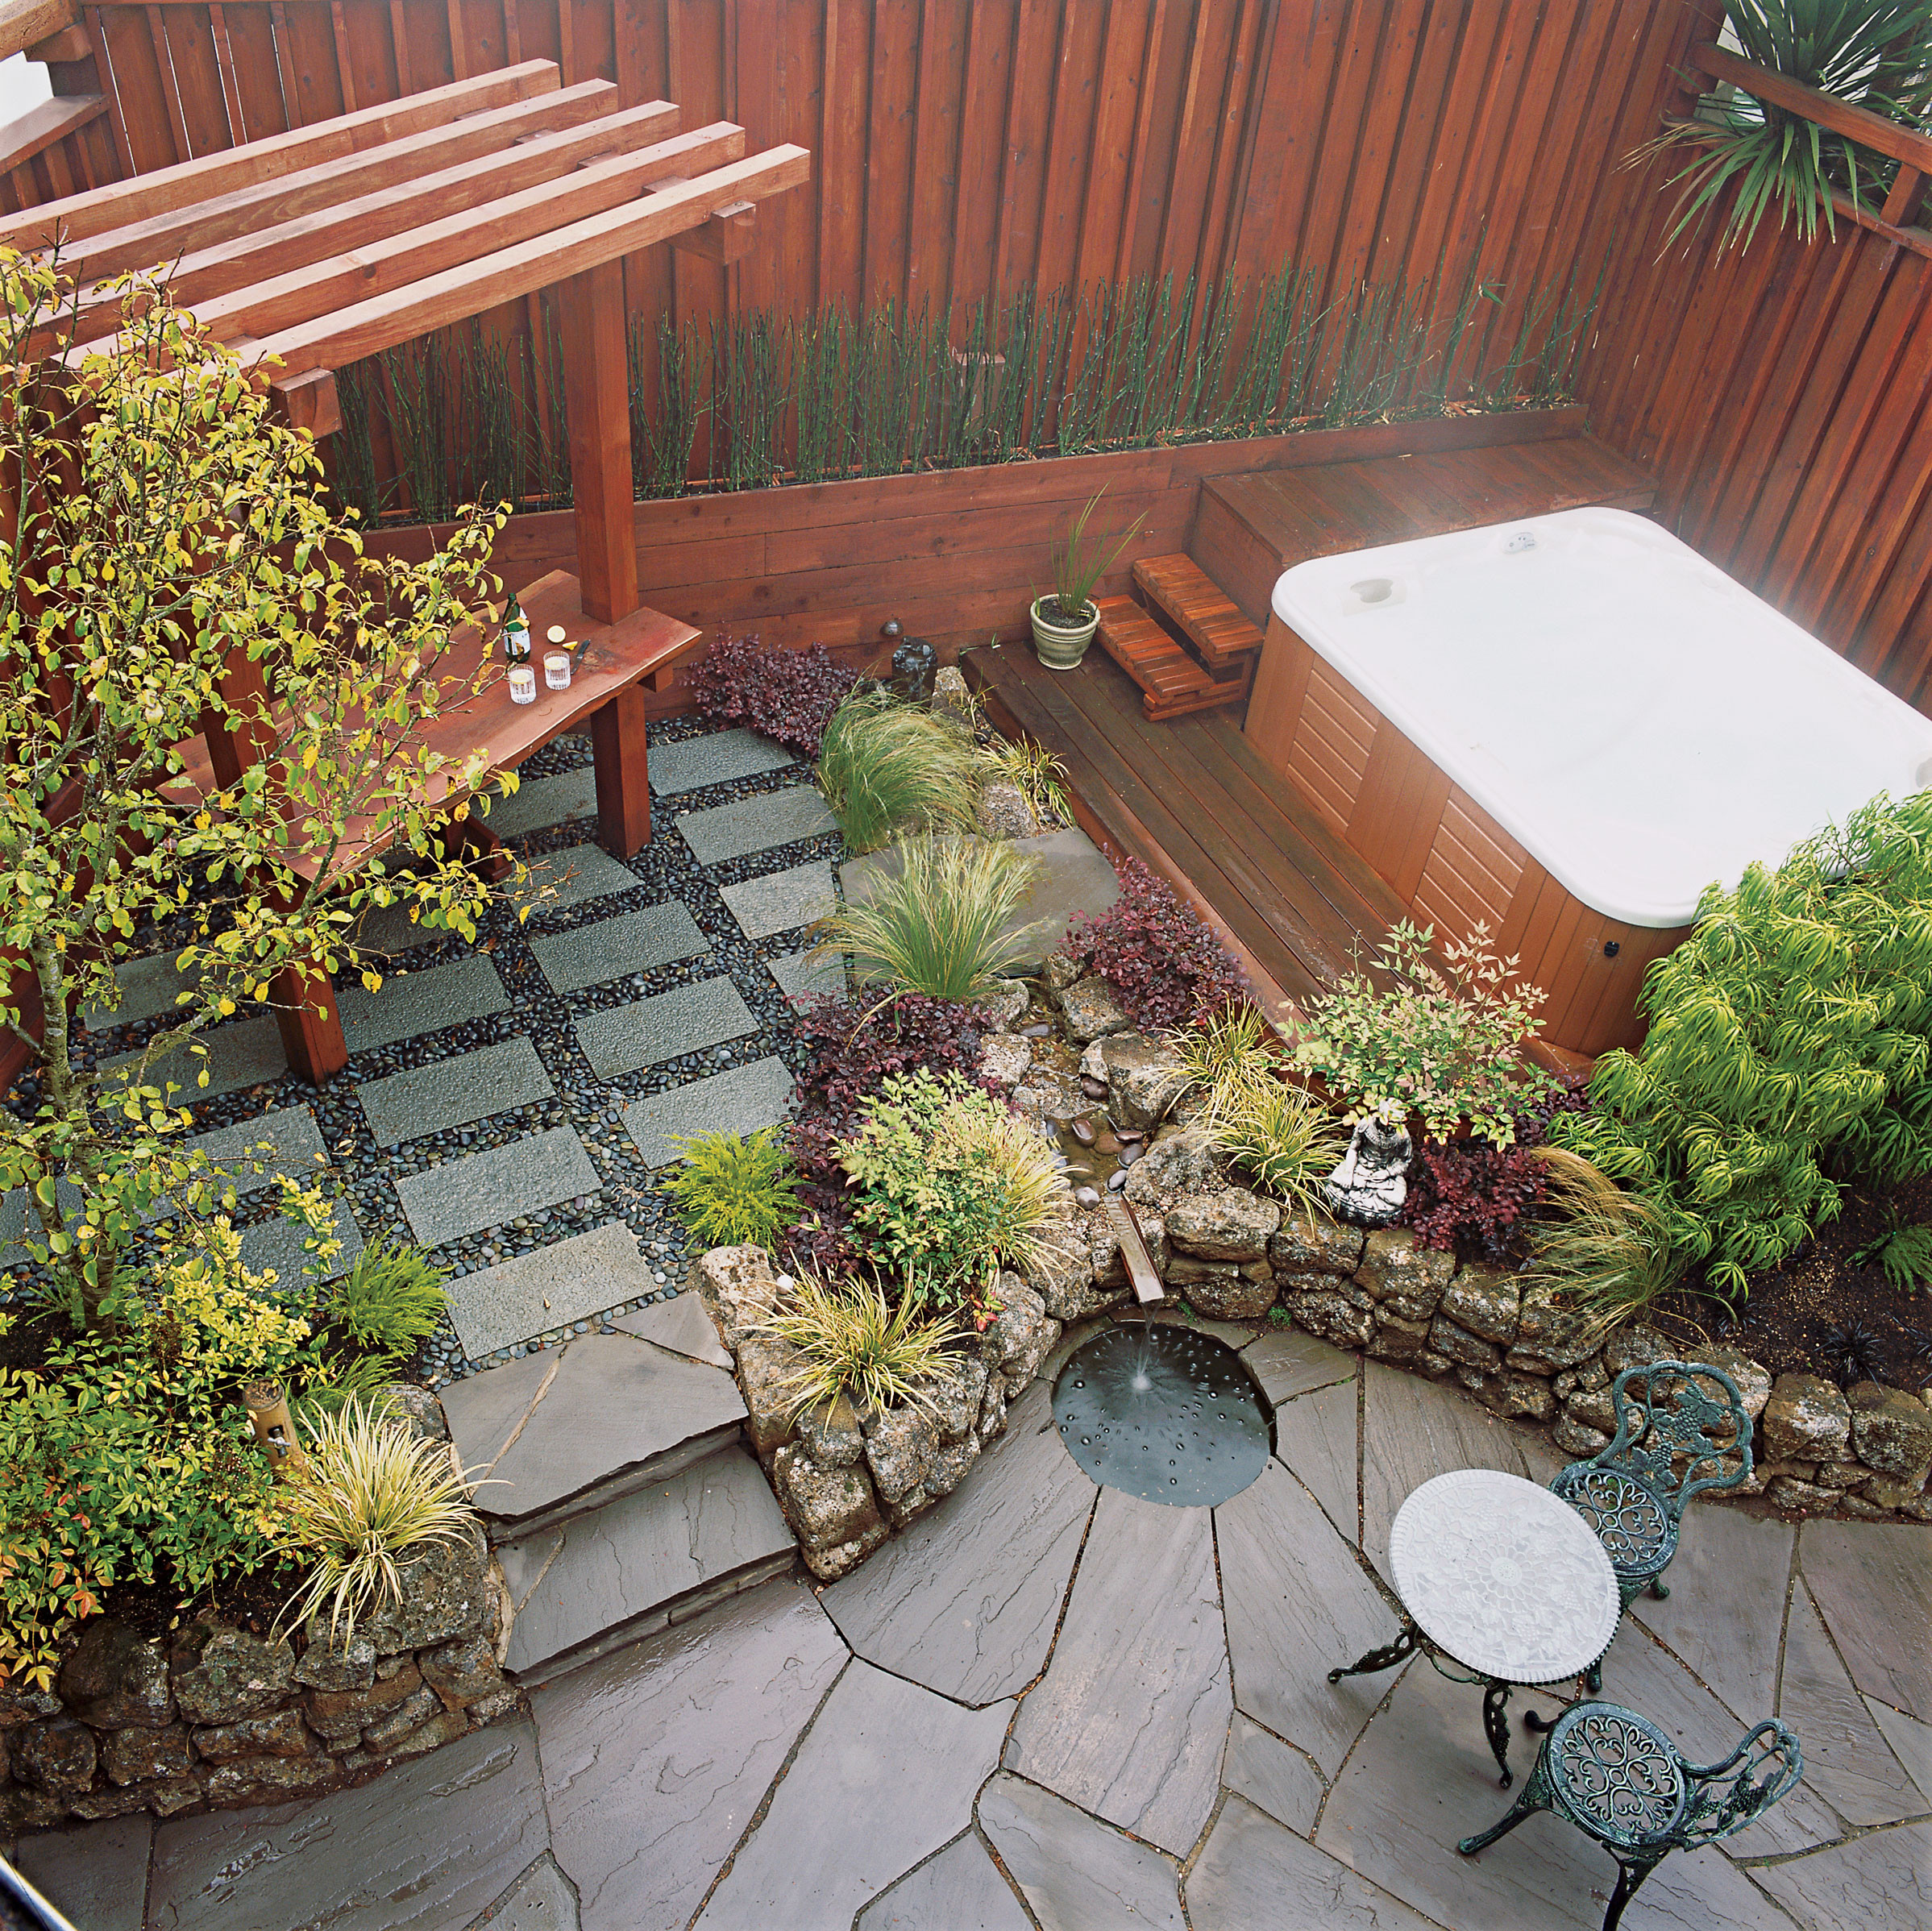 Best ideas about Patio Garden Ideas
. Save or Pin Small garden secrets Sunset Magazine Now.